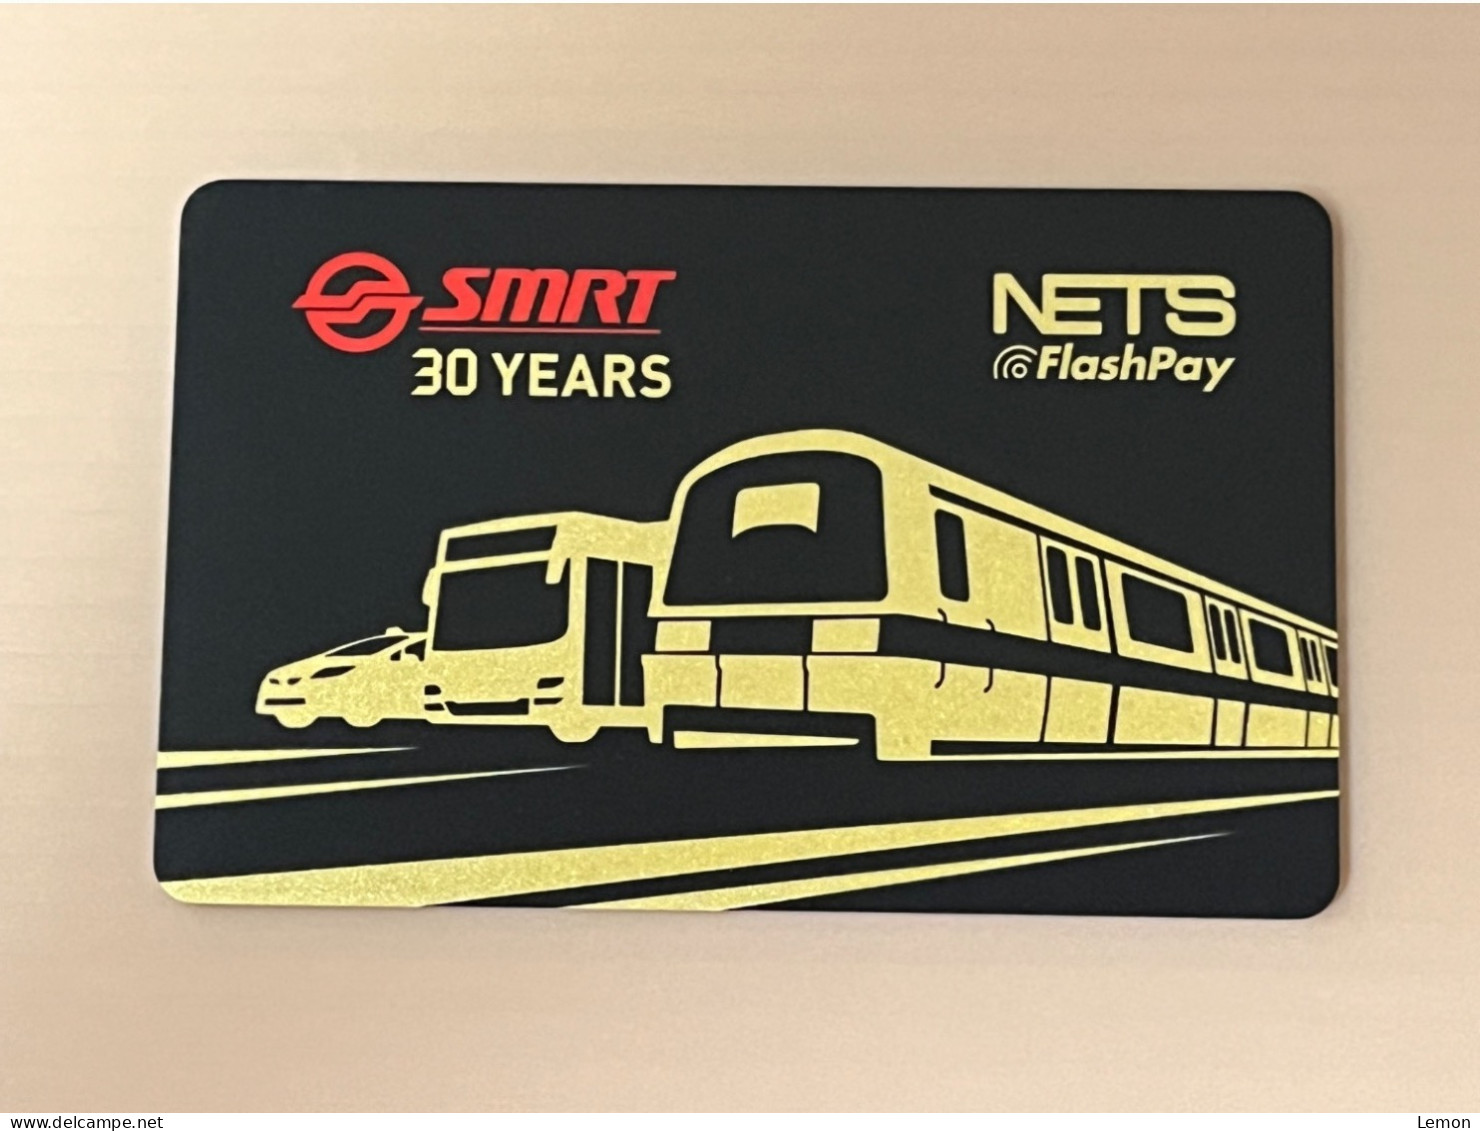 Singapore Nets Flashpay EZ Link Transport Metro Train Subway Card, SMRT 30 Years Gold, Set Of 1 Used Card - Singapur